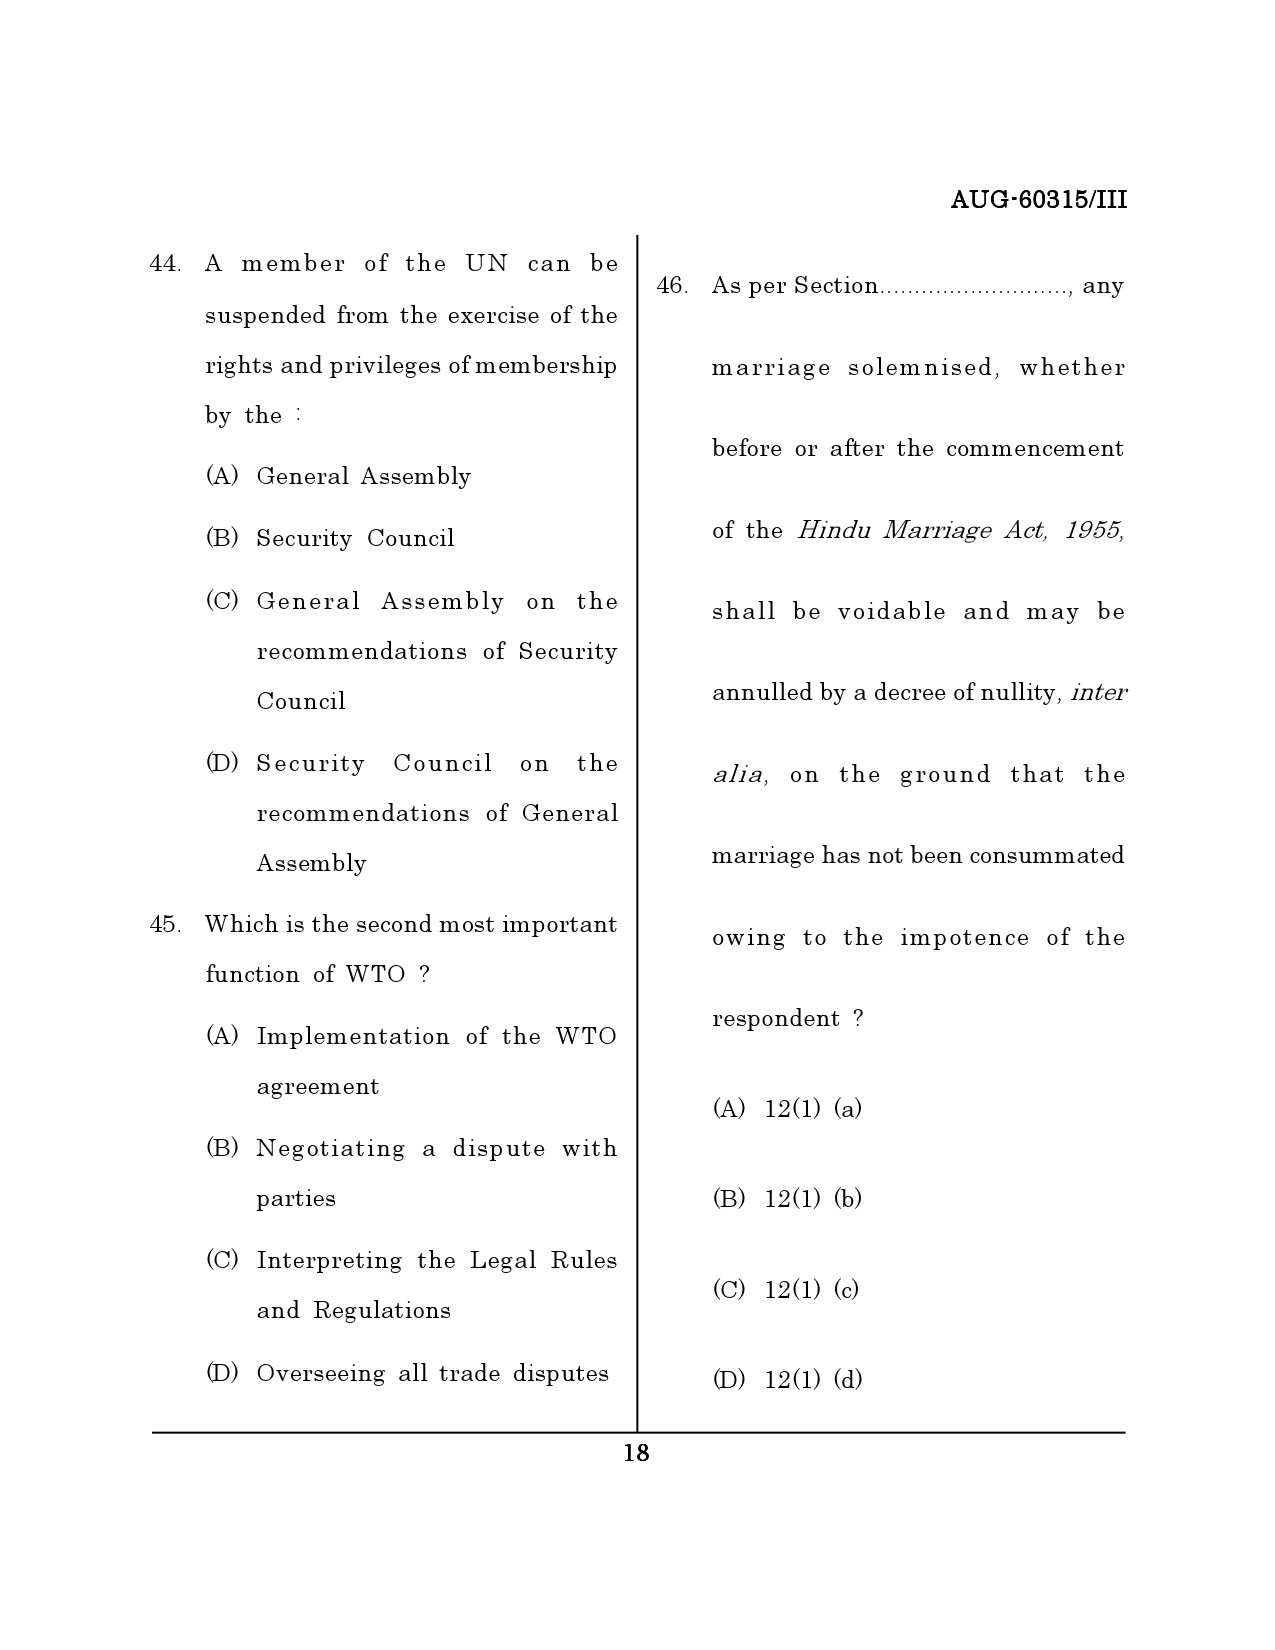 Maharashtra SET Law Question Paper III August 2015 17